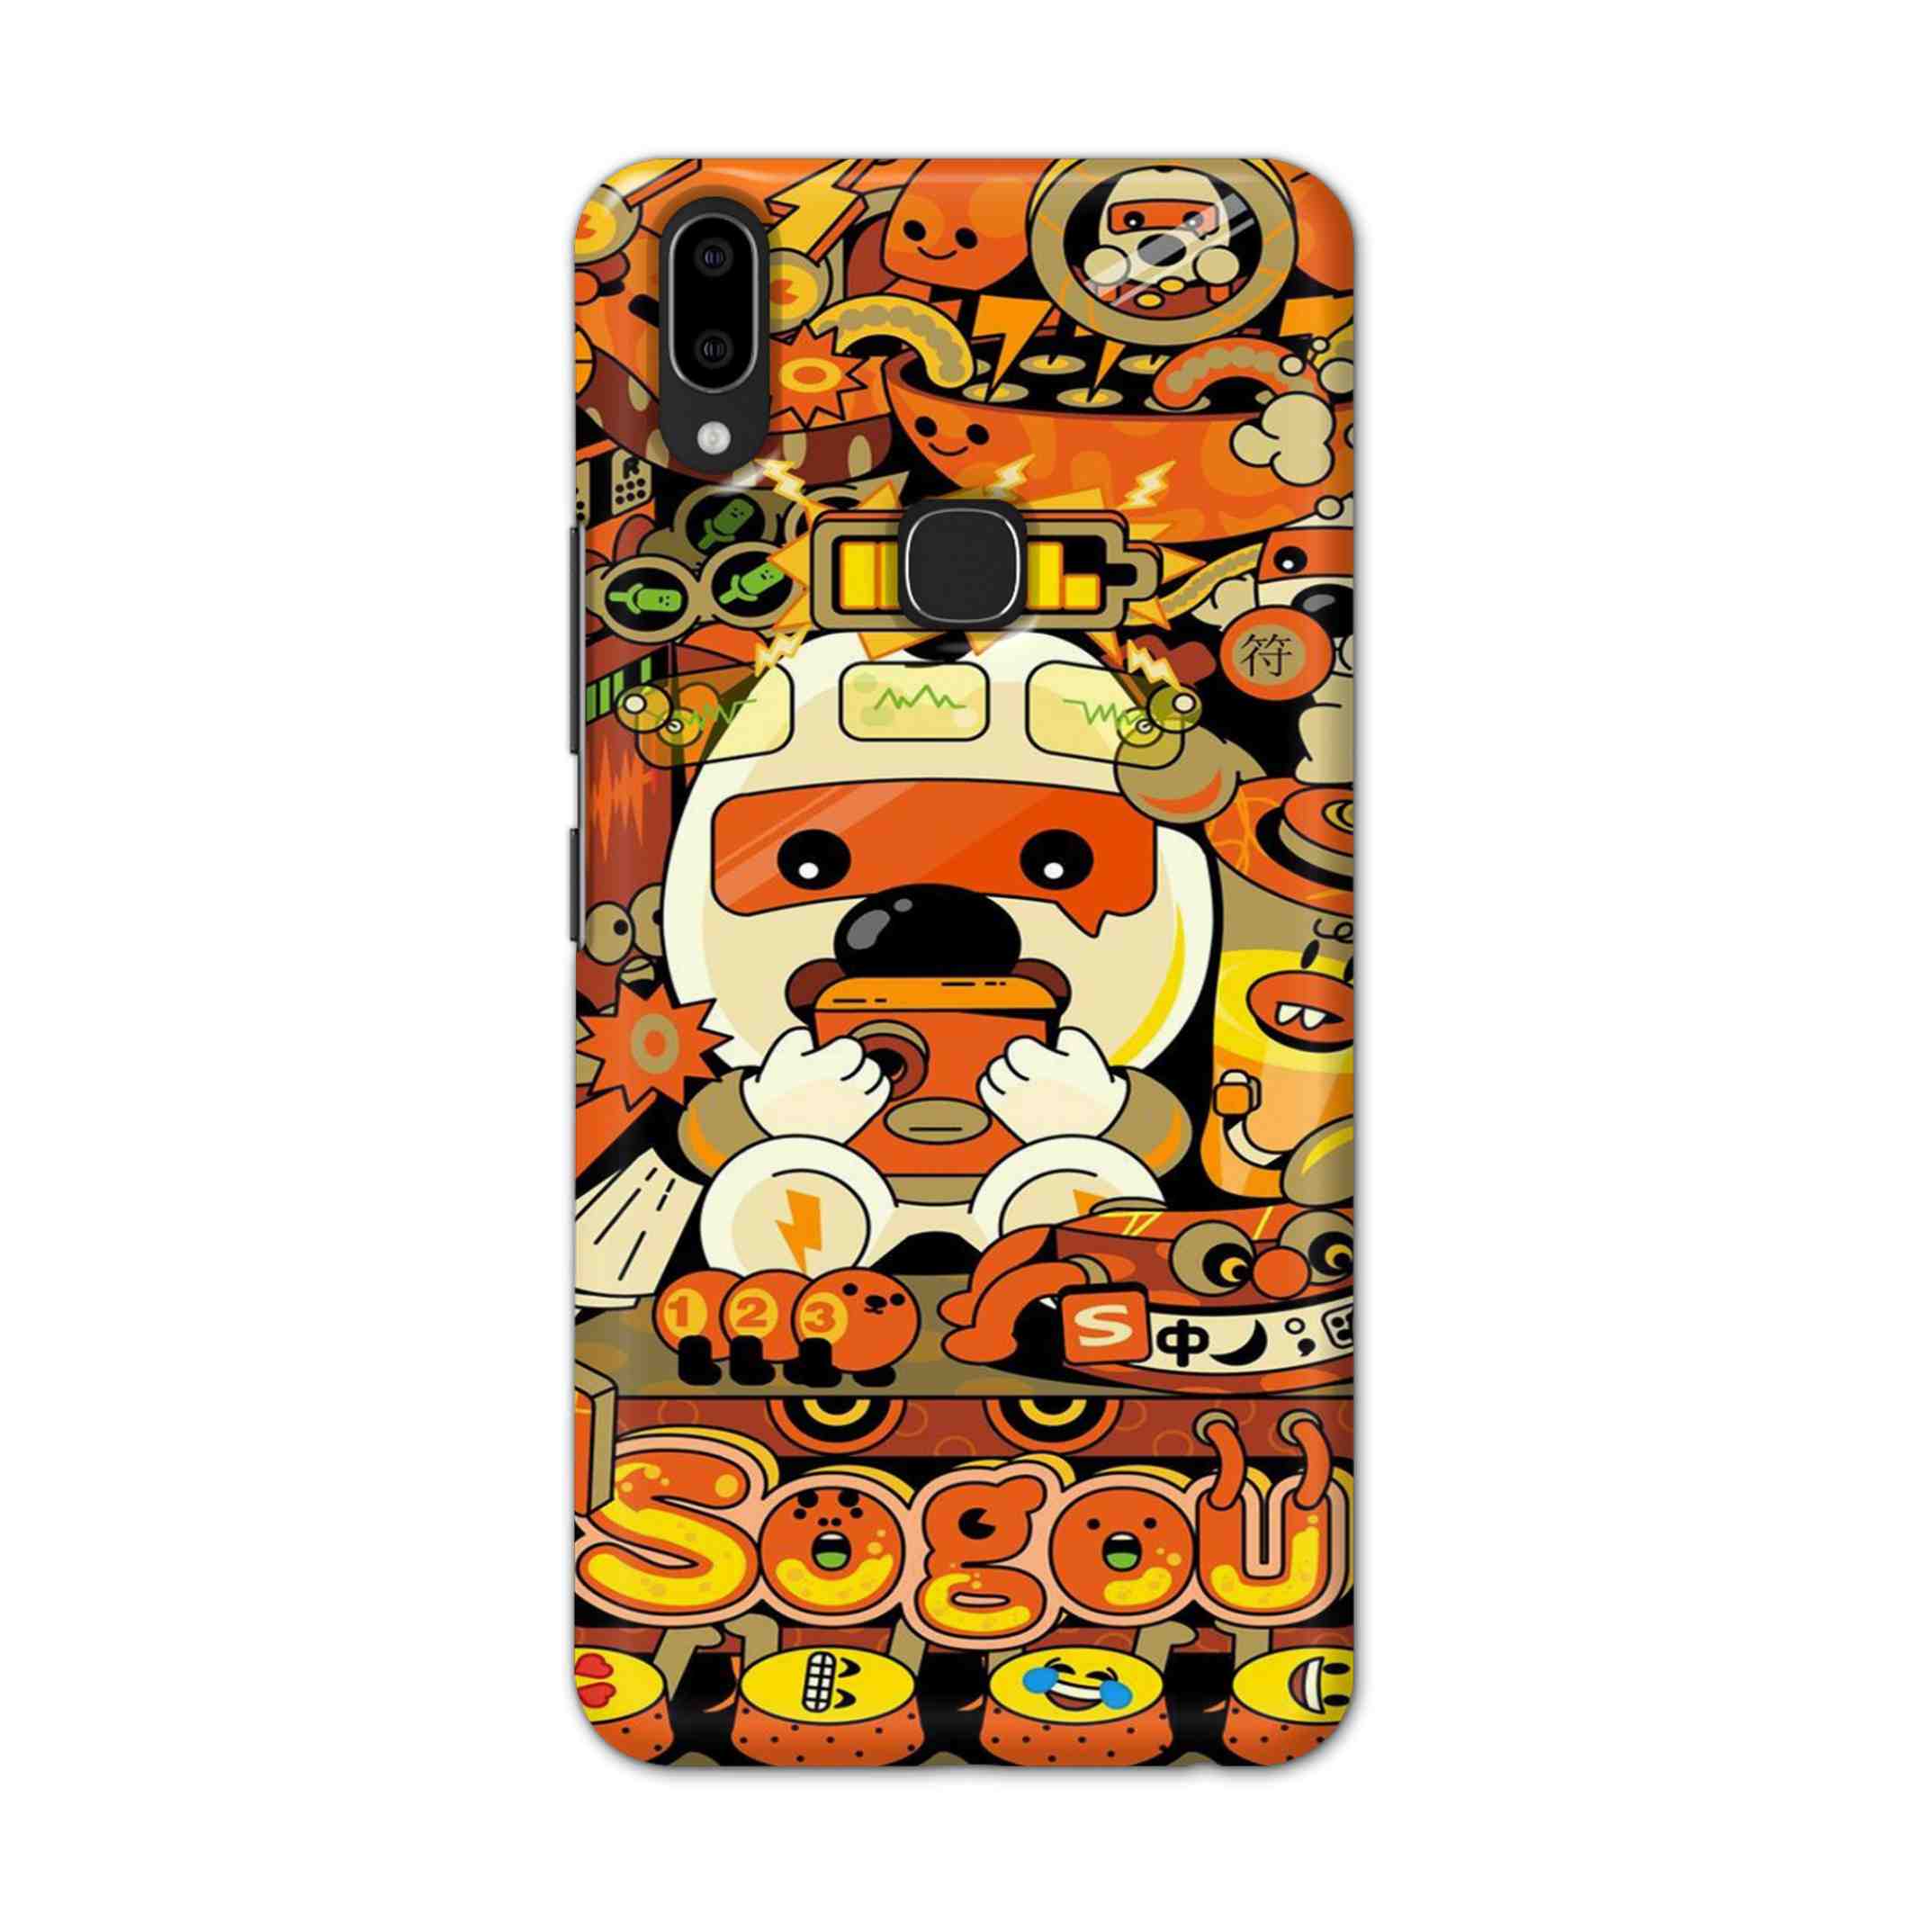 Buy Sogou Hard Back Mobile Phone Case Cover For Vivo V9 / V9 Youth Online